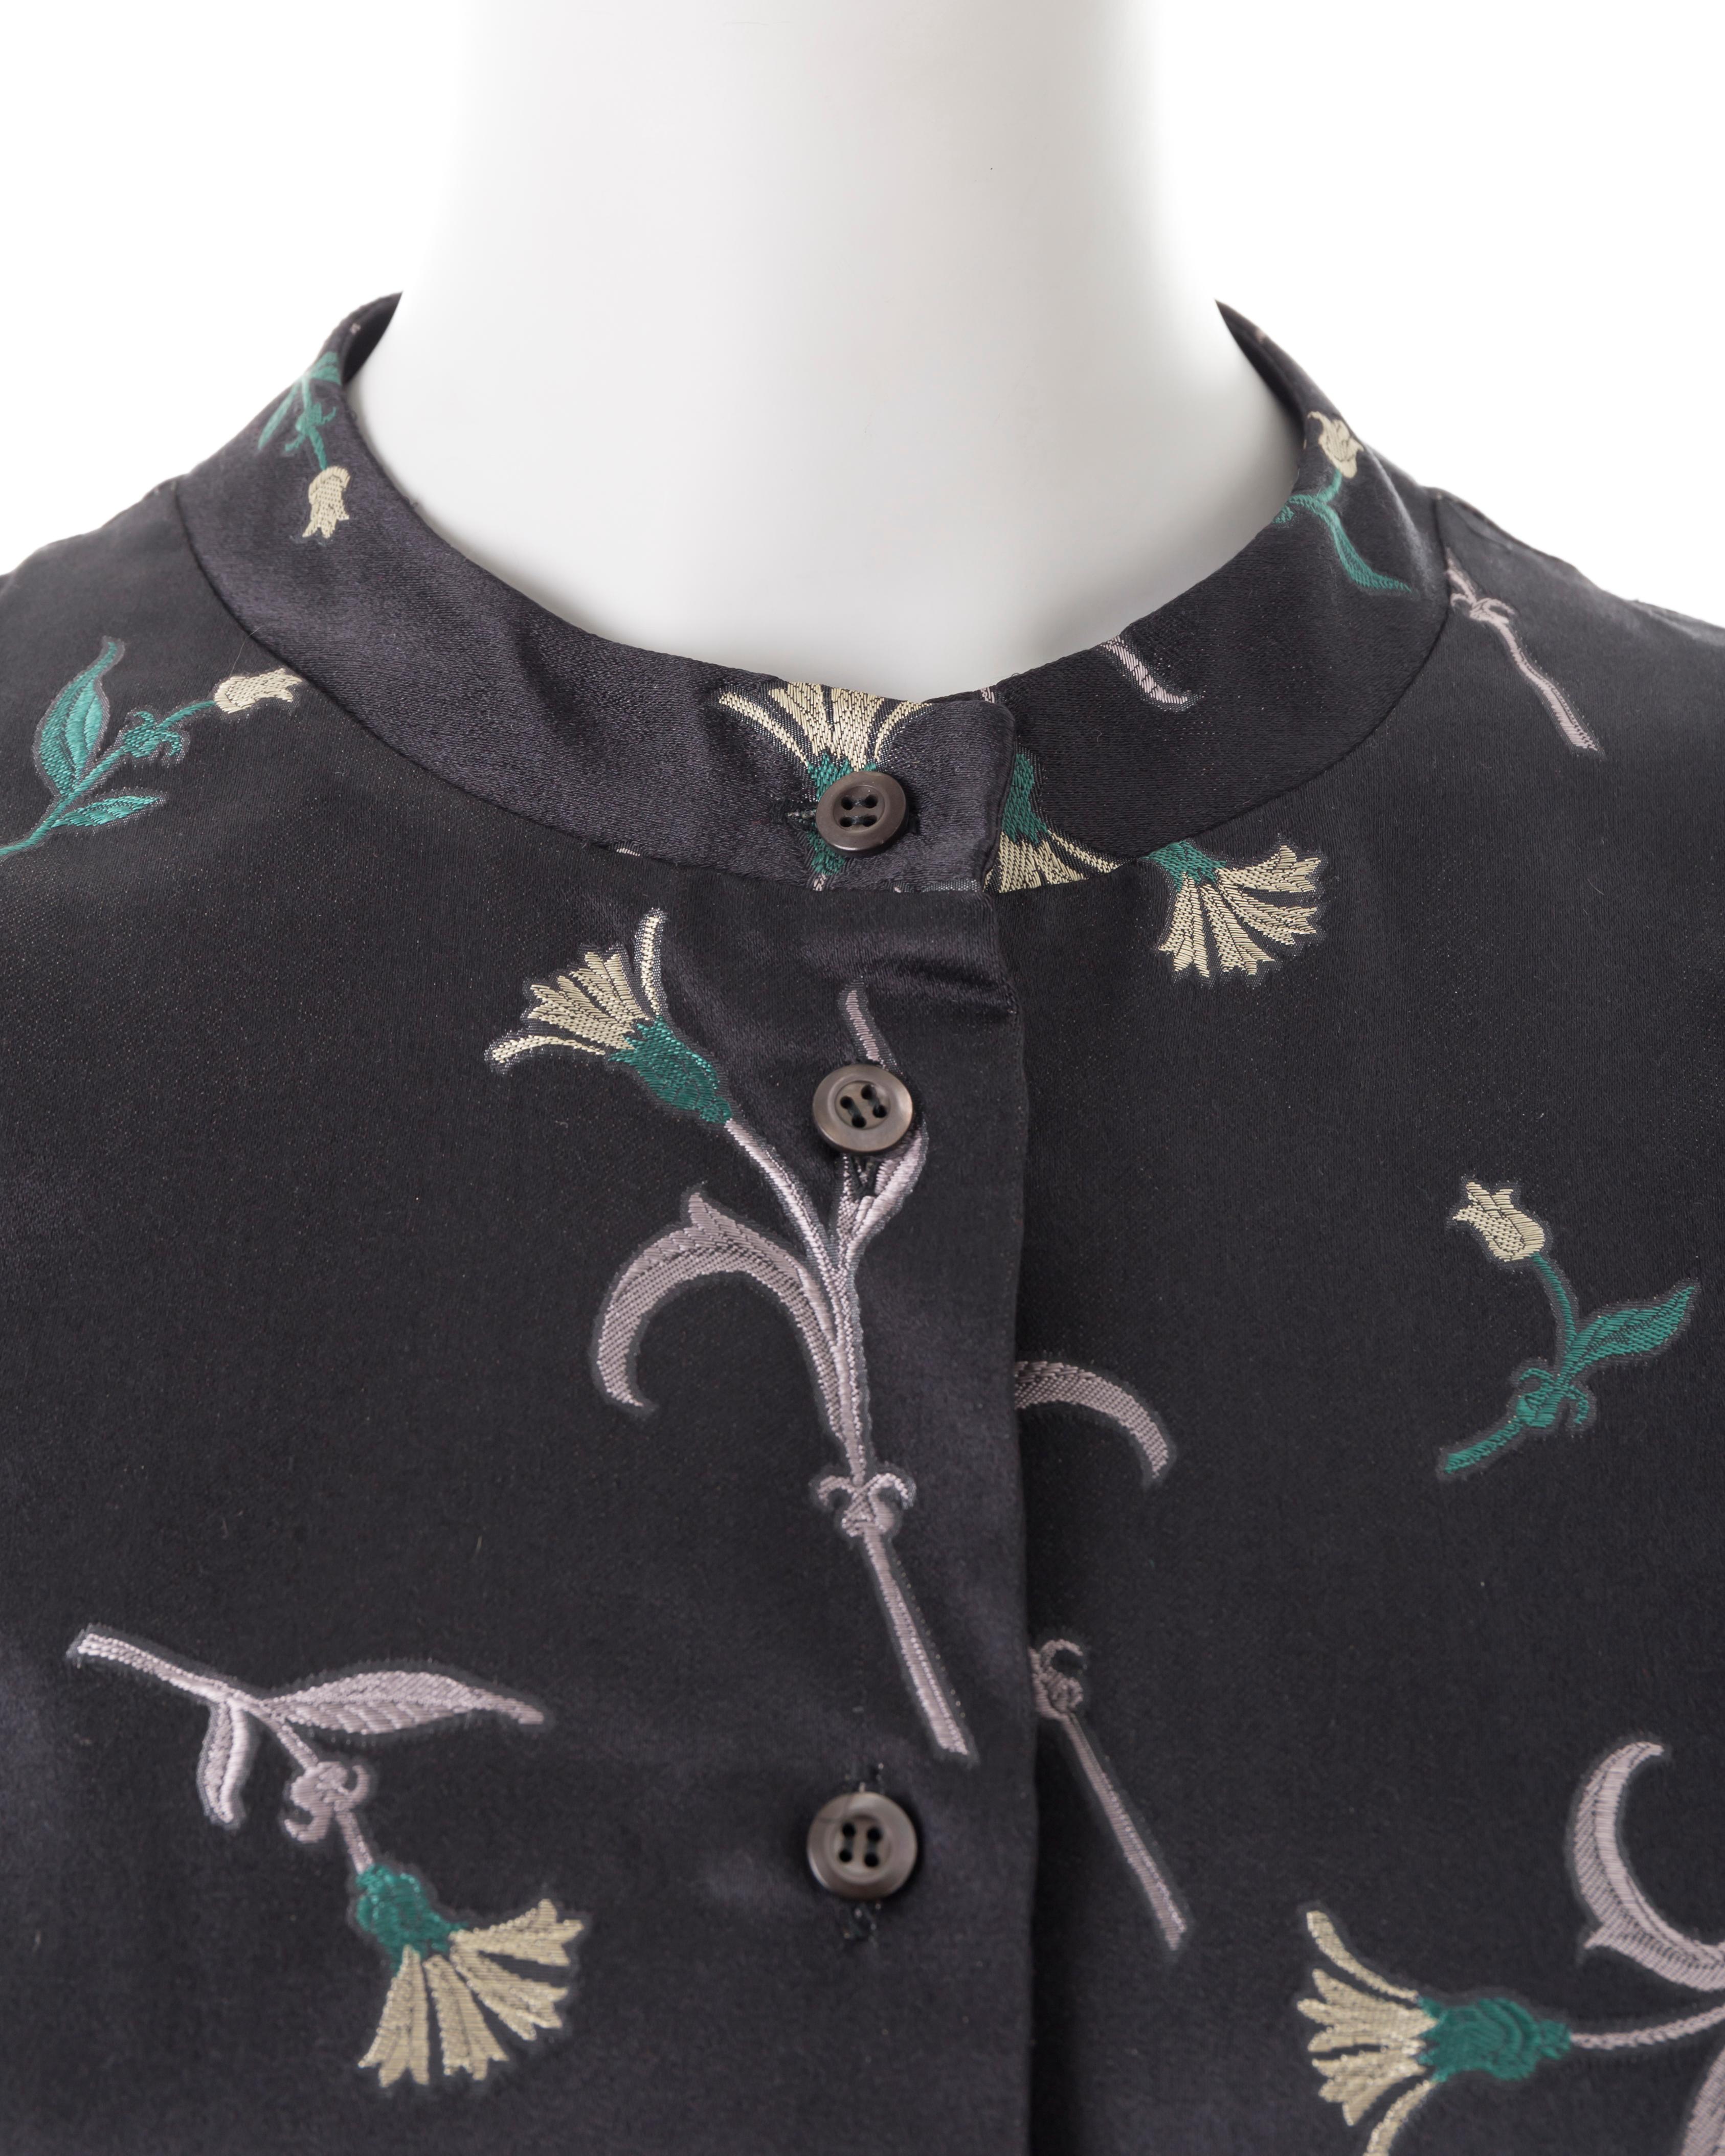 - Black silk button-up shirt
- Mandarin collar
- Long sleeves
- Floral jacquard print
- Size IT 44